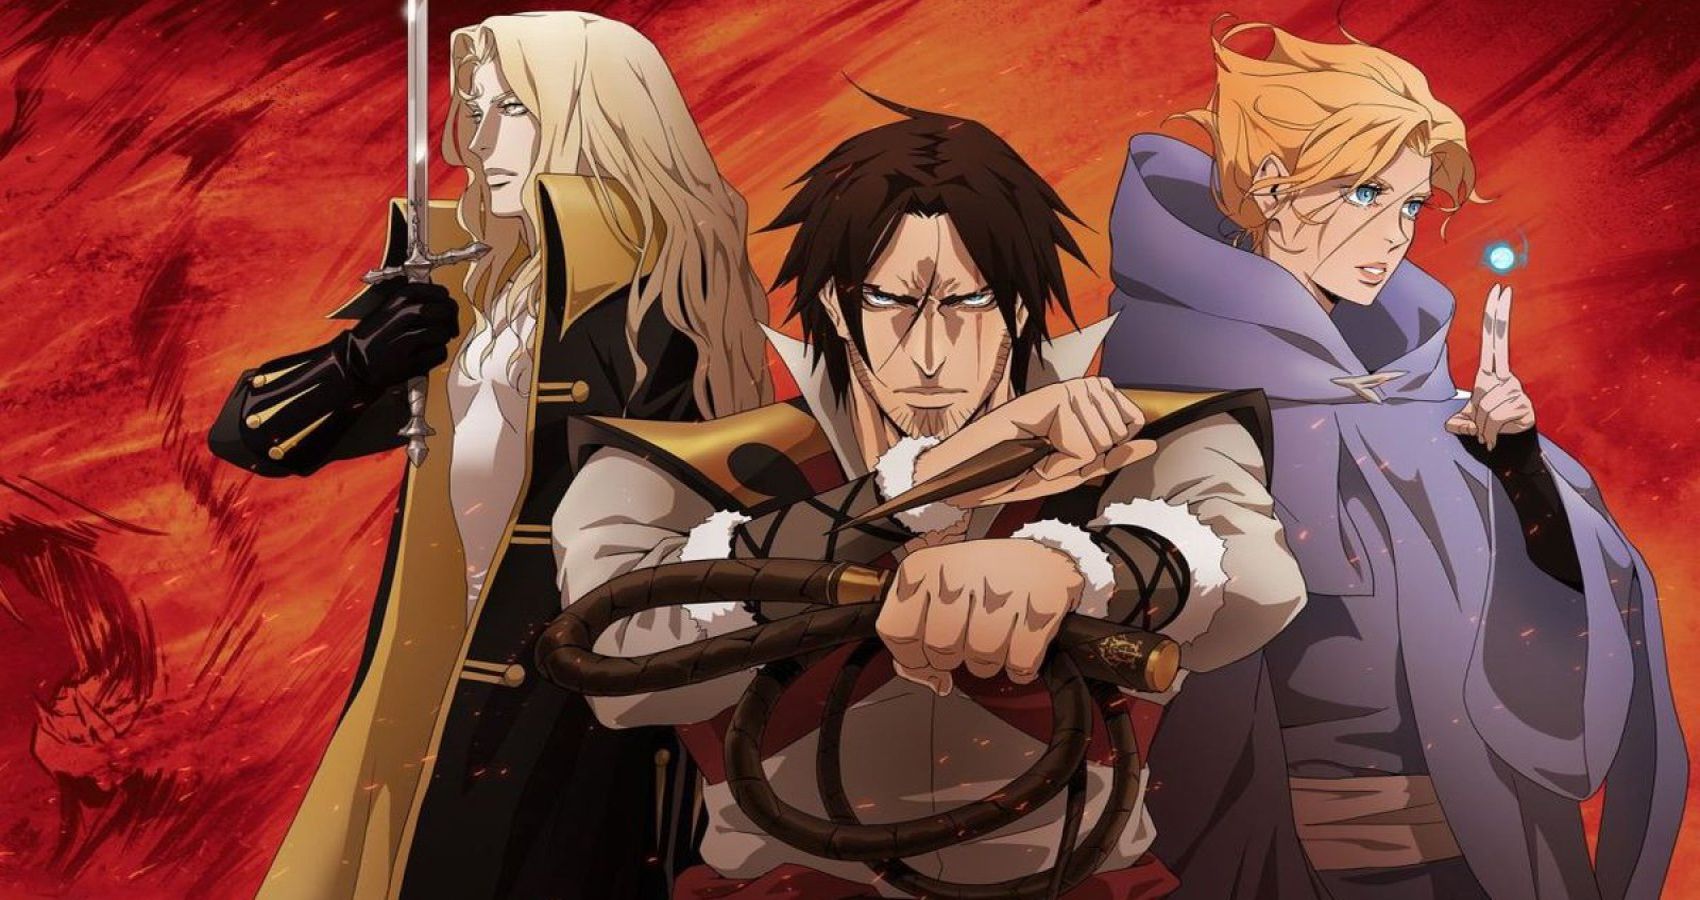 Netflixs Castlevania season 3 Anime series boss stars on Dracula  Infinite Corridor  EWcom